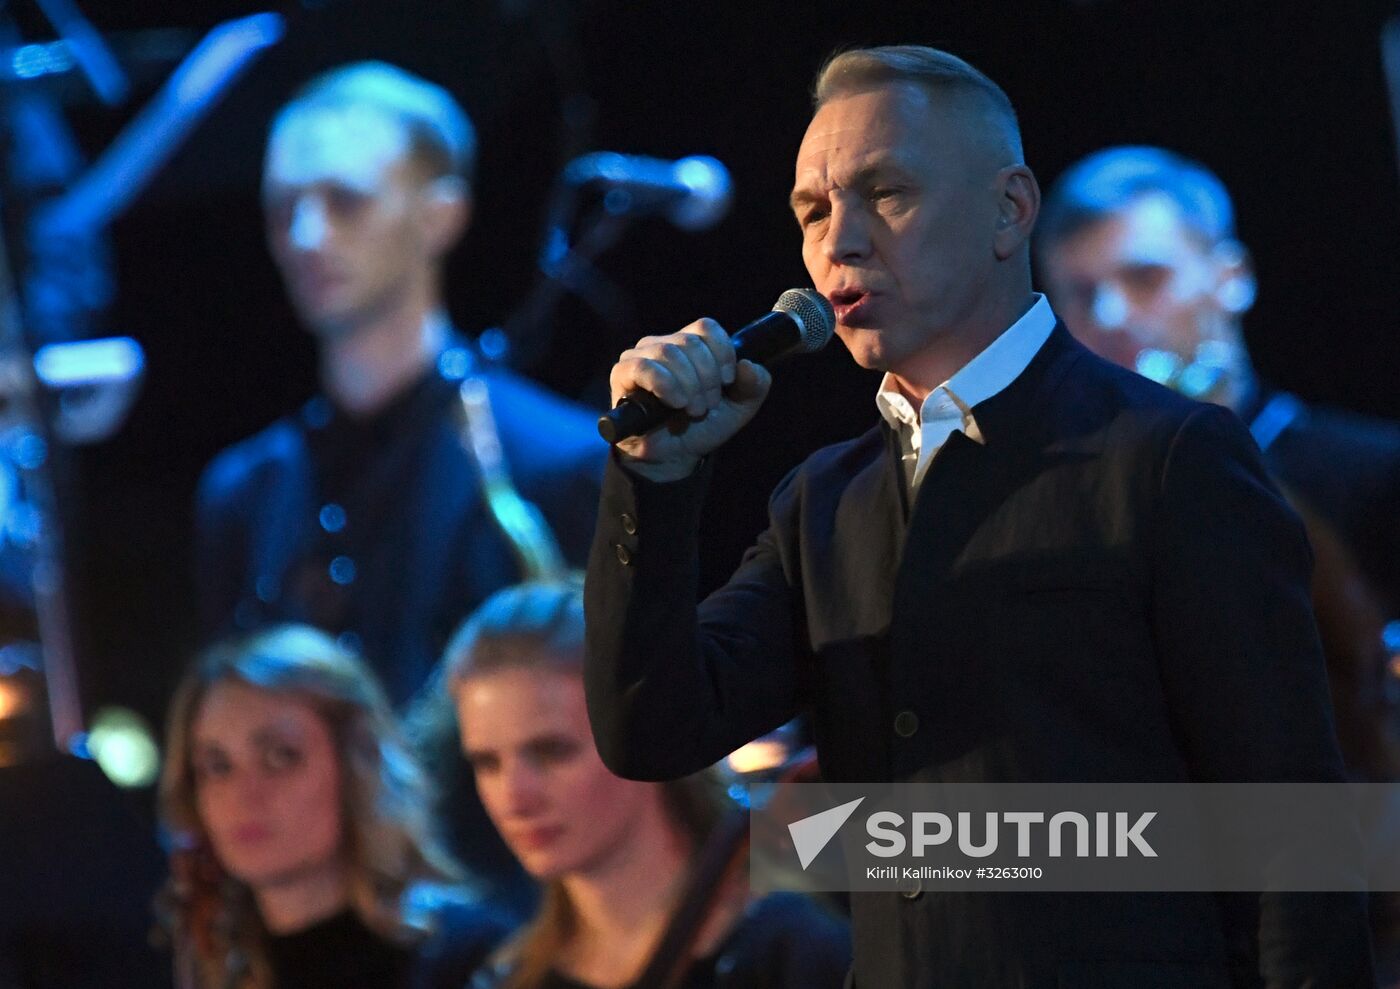 Vladimir Vysotsky's 'One's own track' award ceremony